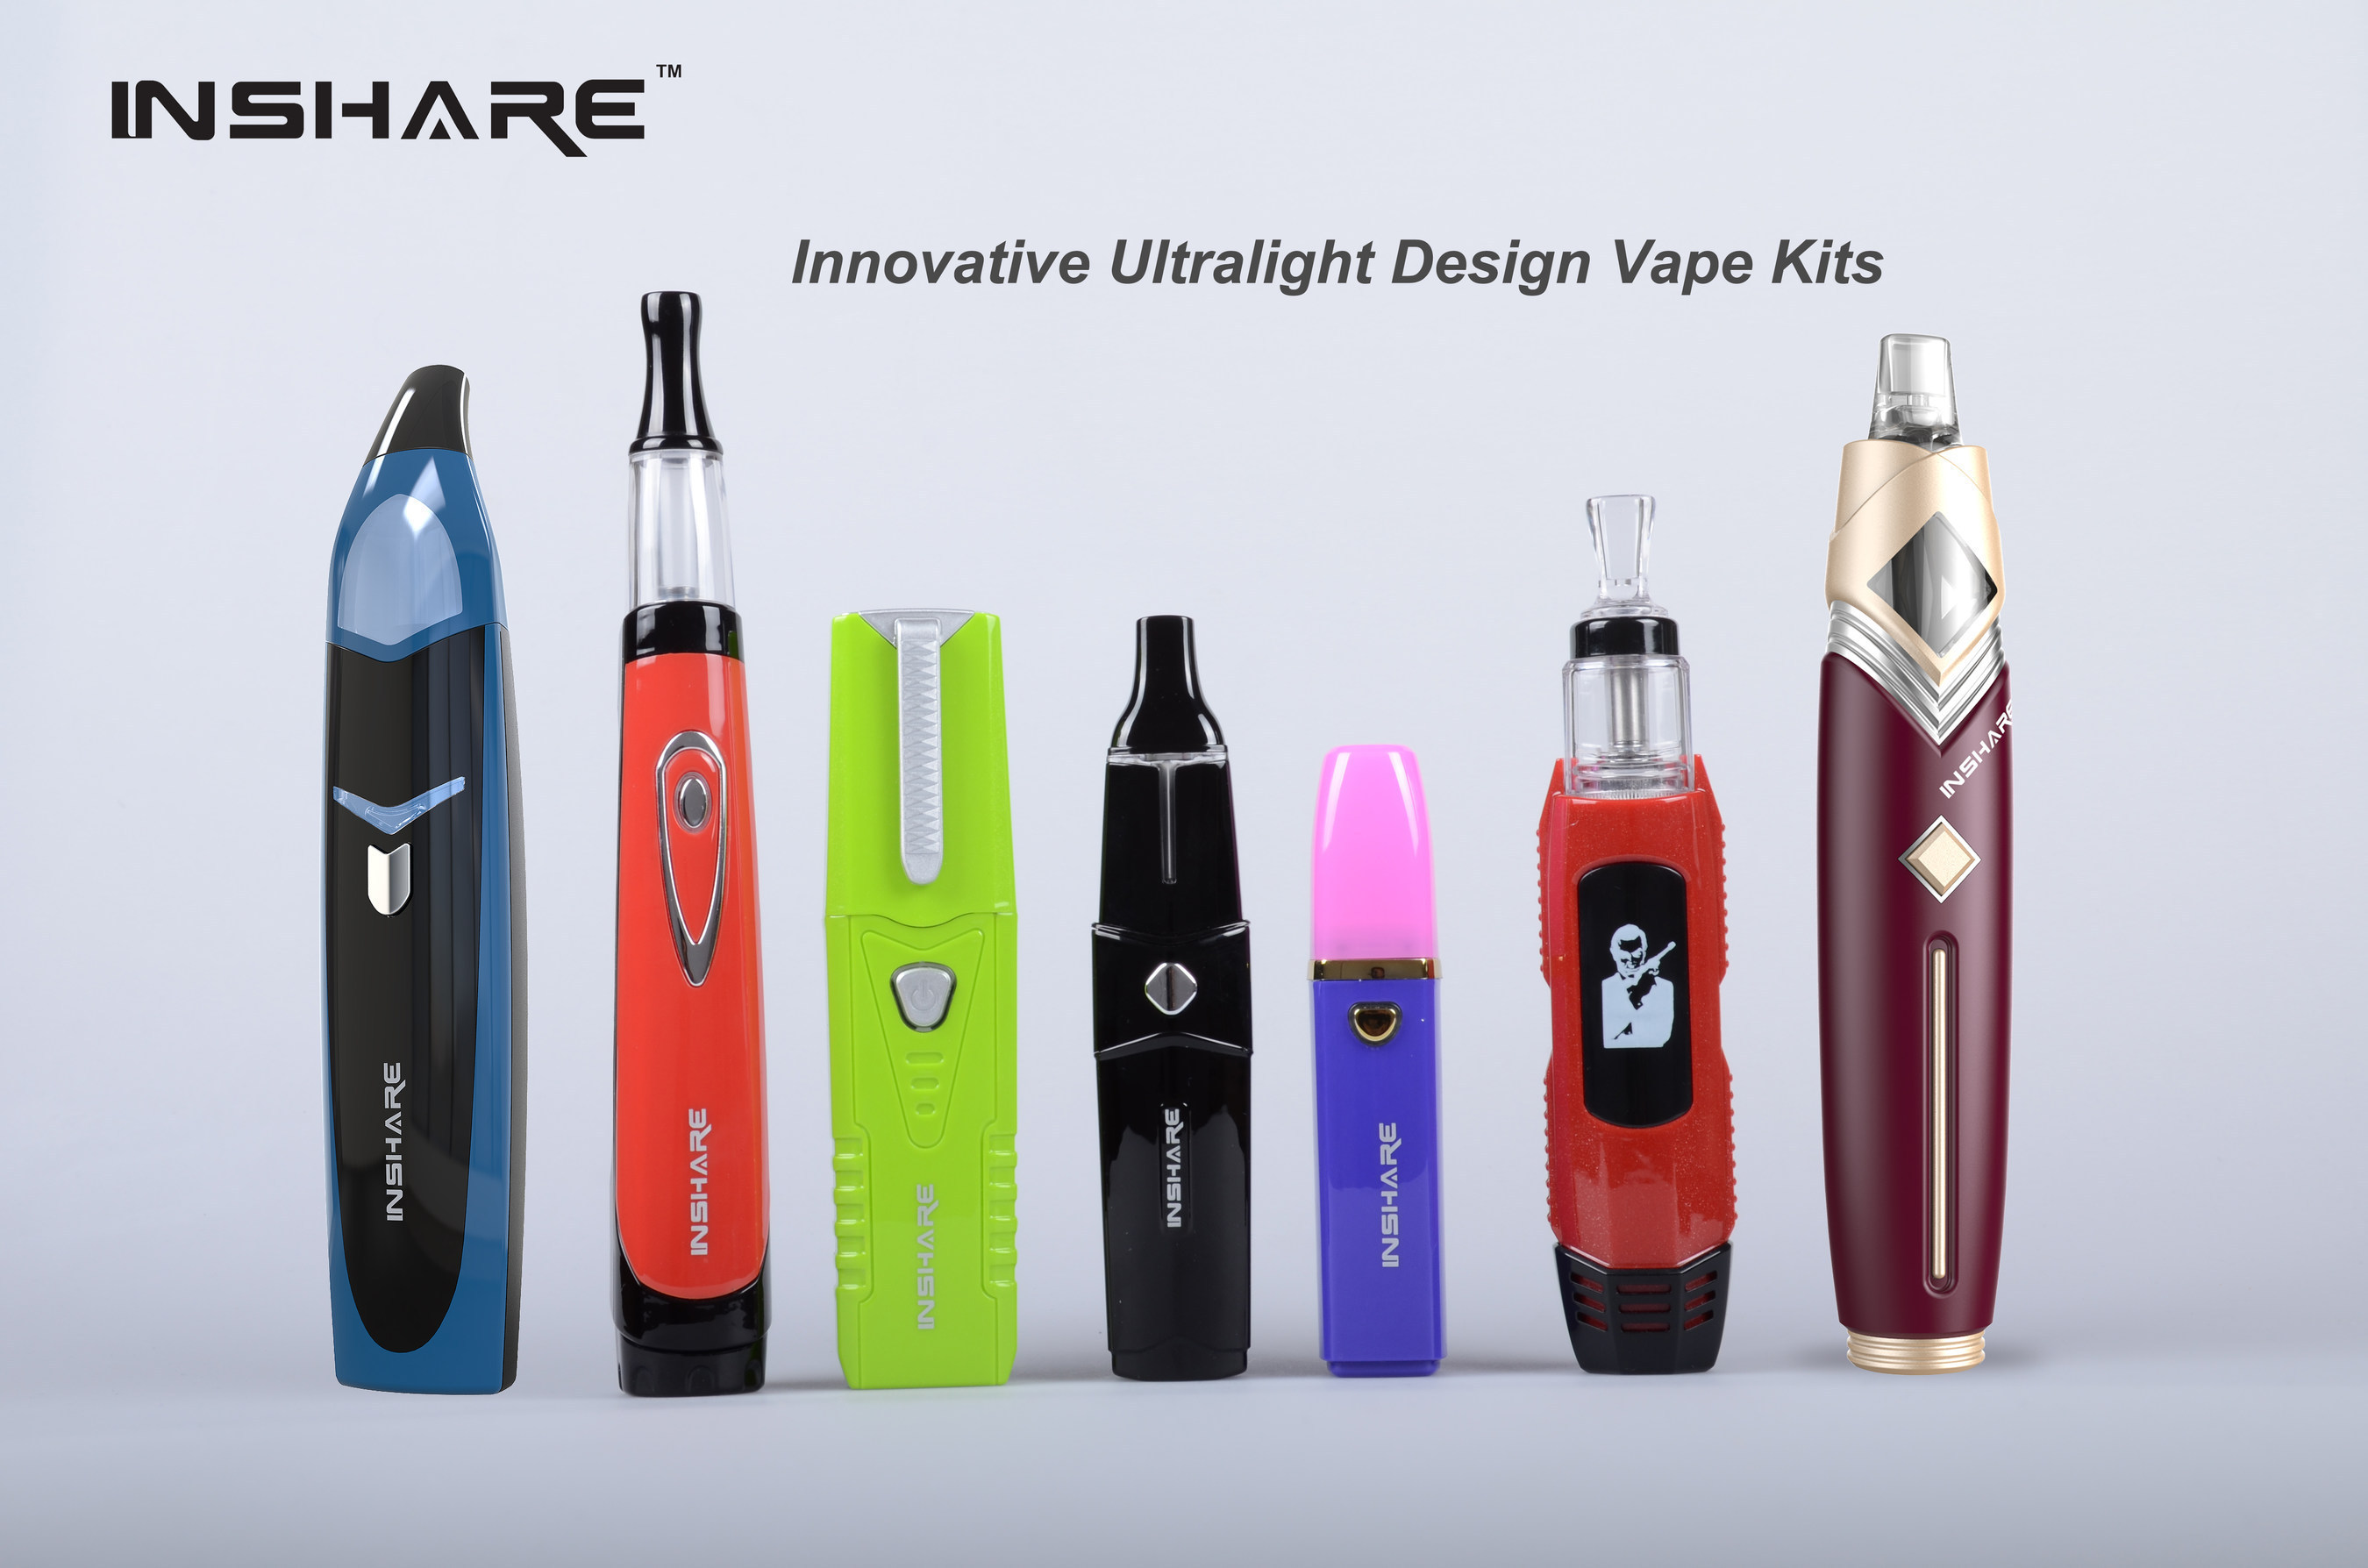 Inshare Innovative Ultralight Design Vape Kits